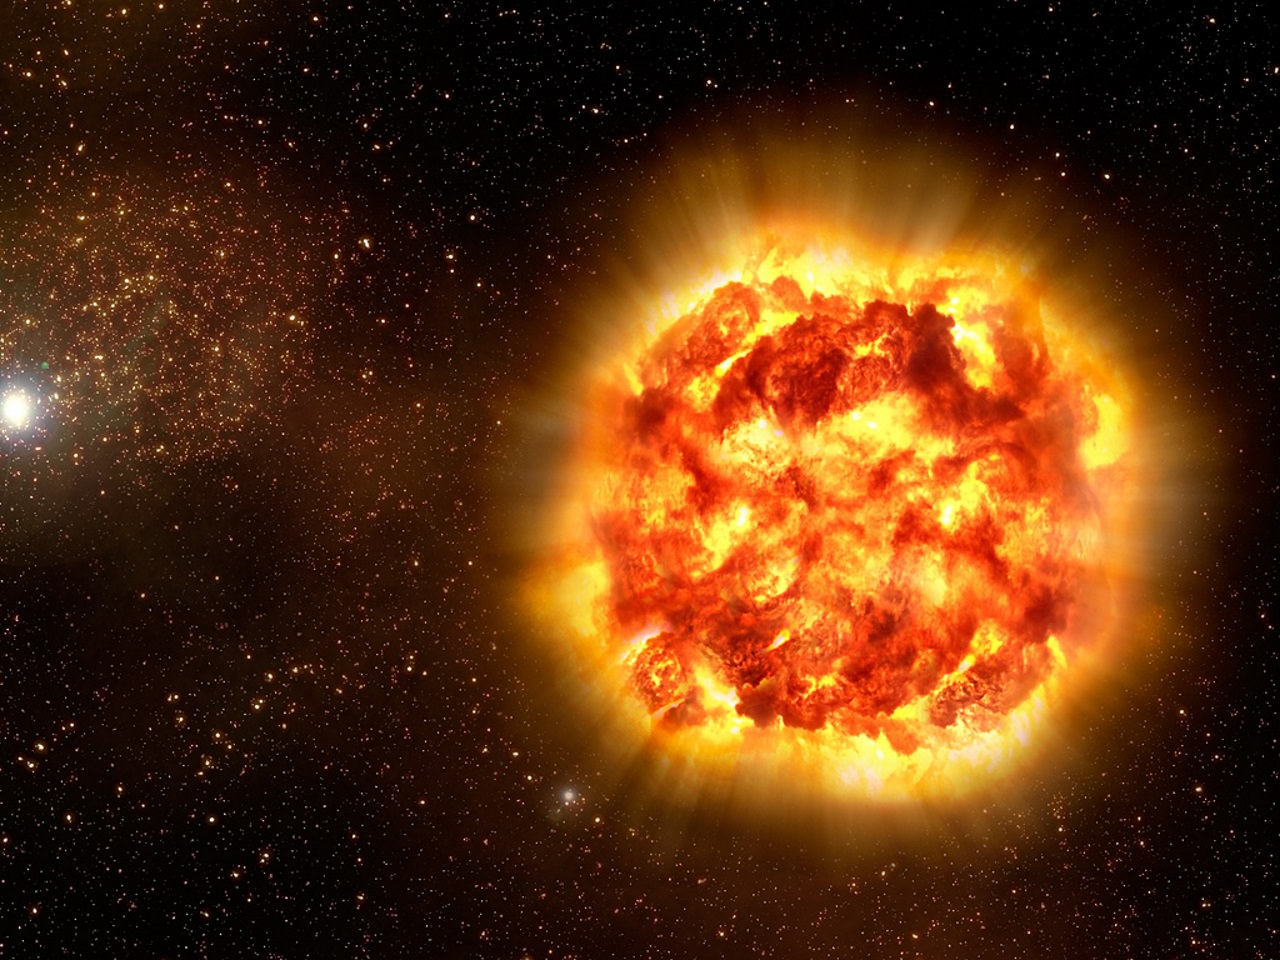 Artist's impression of a Type II supernova. Credit: ESO